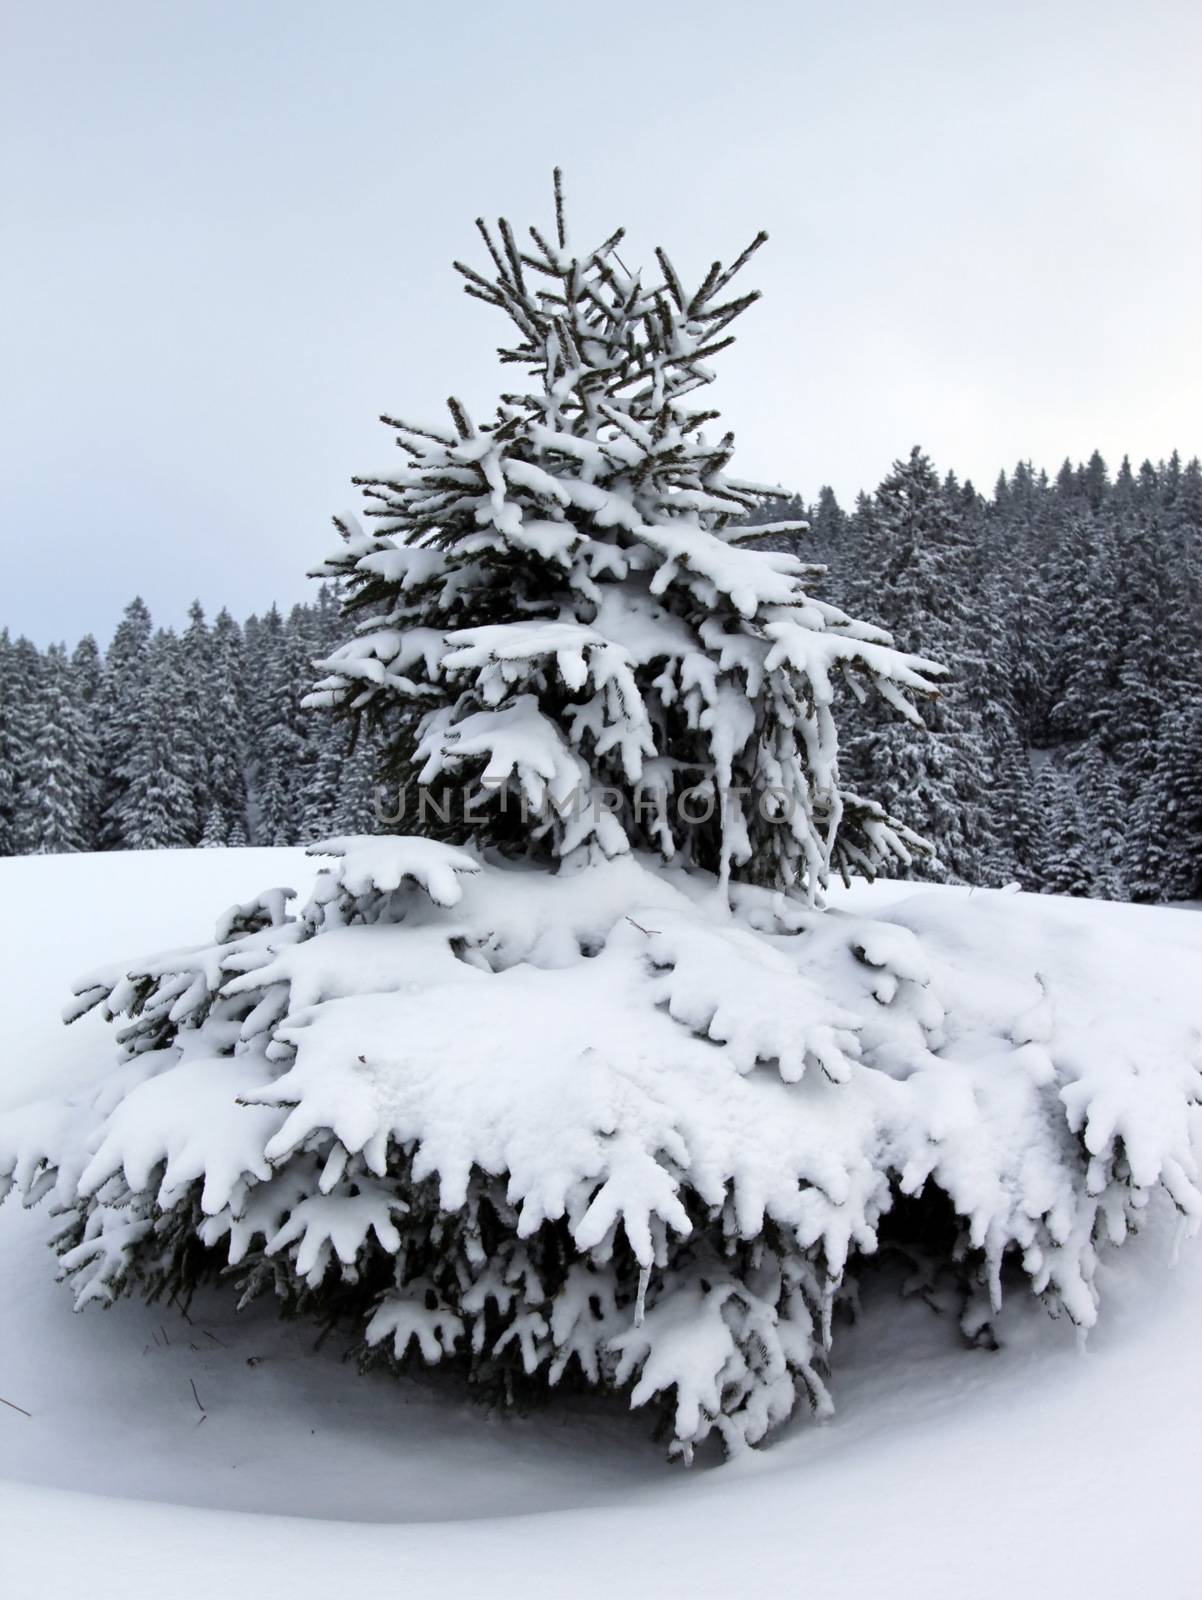 Fir trees in winter, Jura mountain, Switzerland by Elenaphotos21